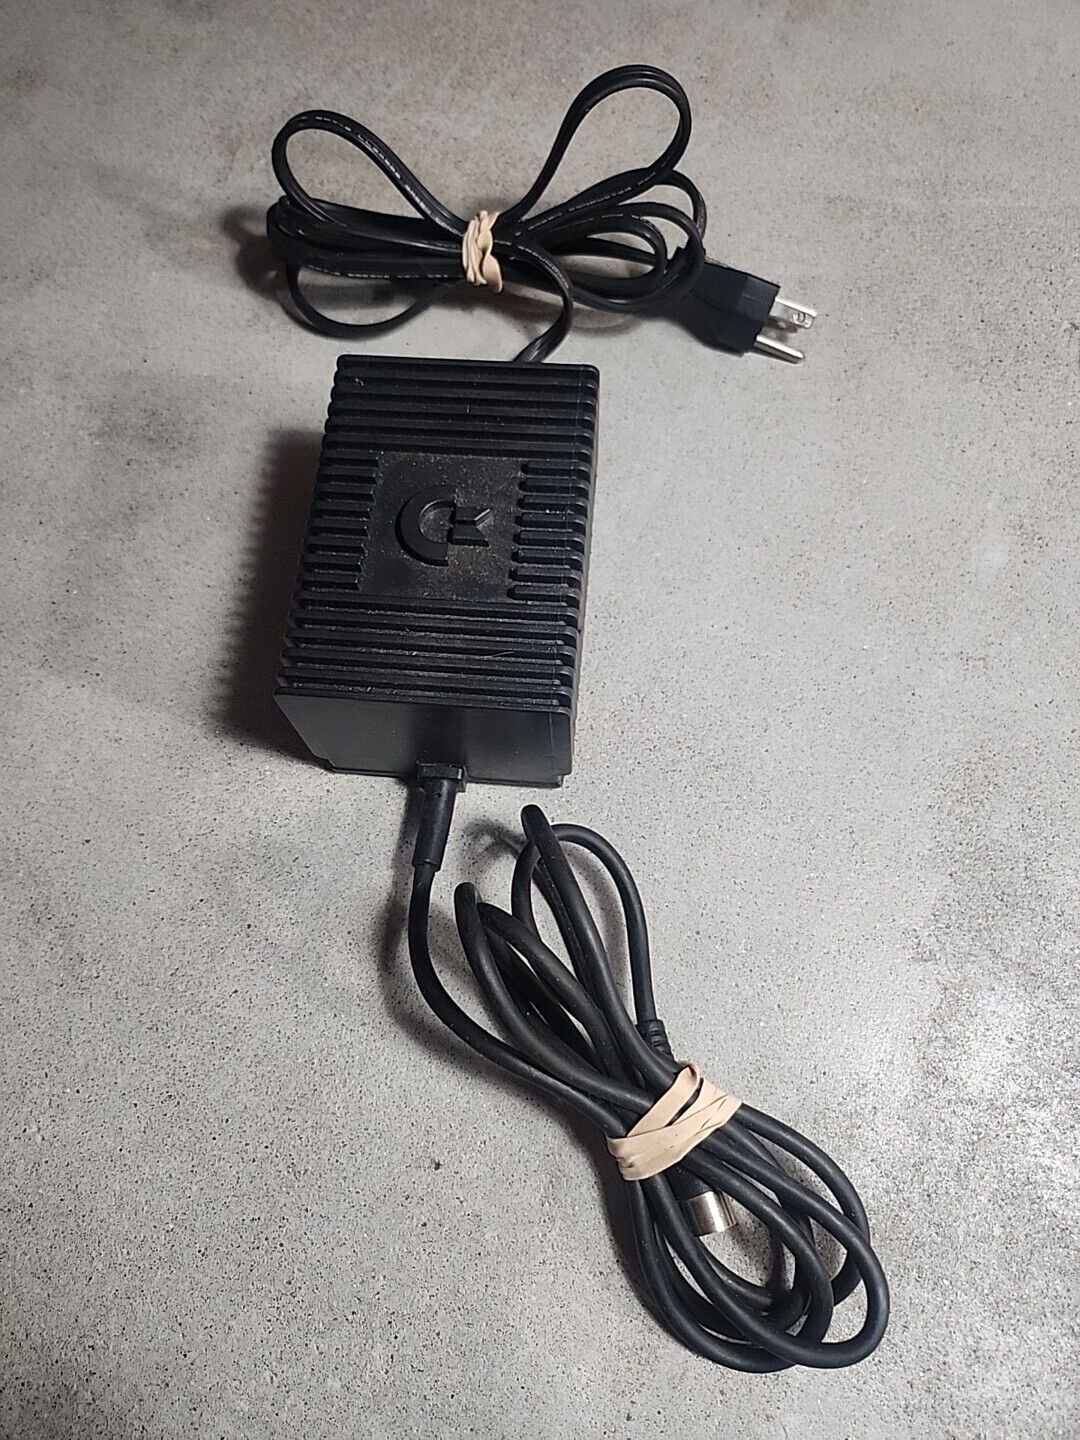 Commodore 64 OEM Original Power Supply Brick Adapter US Connector Vintage 4-Pin